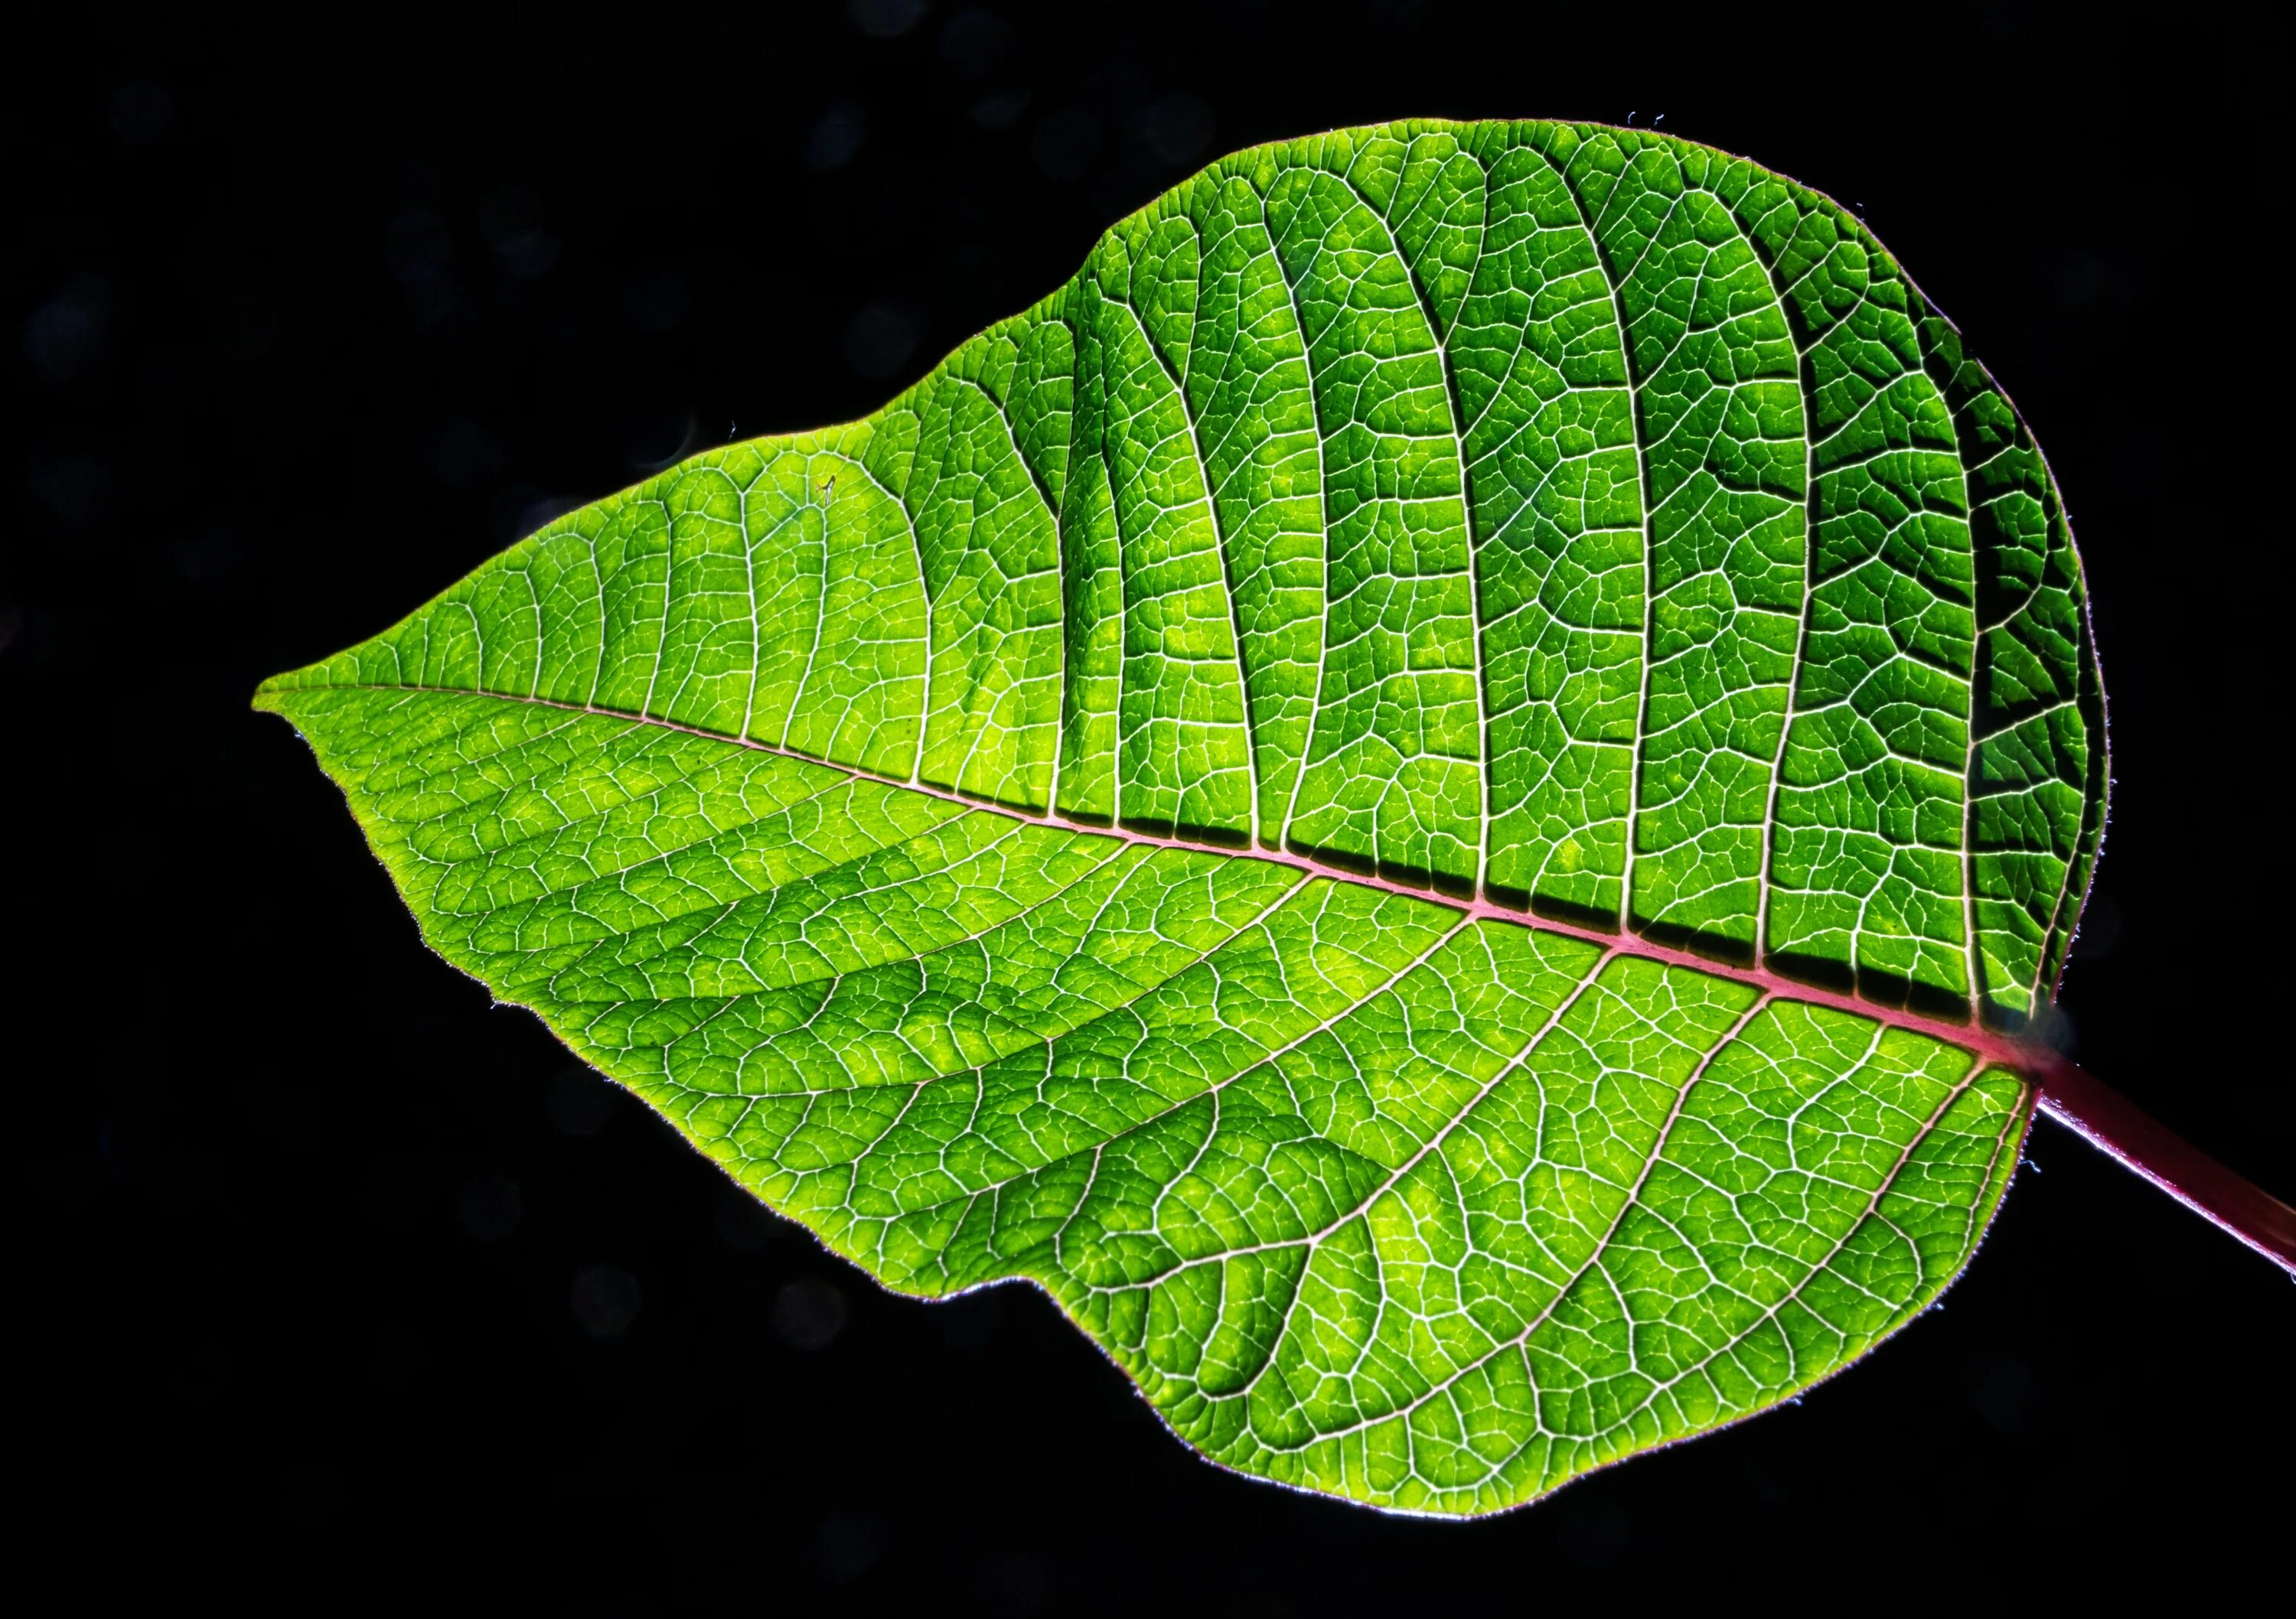 Natural leaves. С826вт38 Leaf. Листья растений. Зеленый лист. Лист с прожилками.